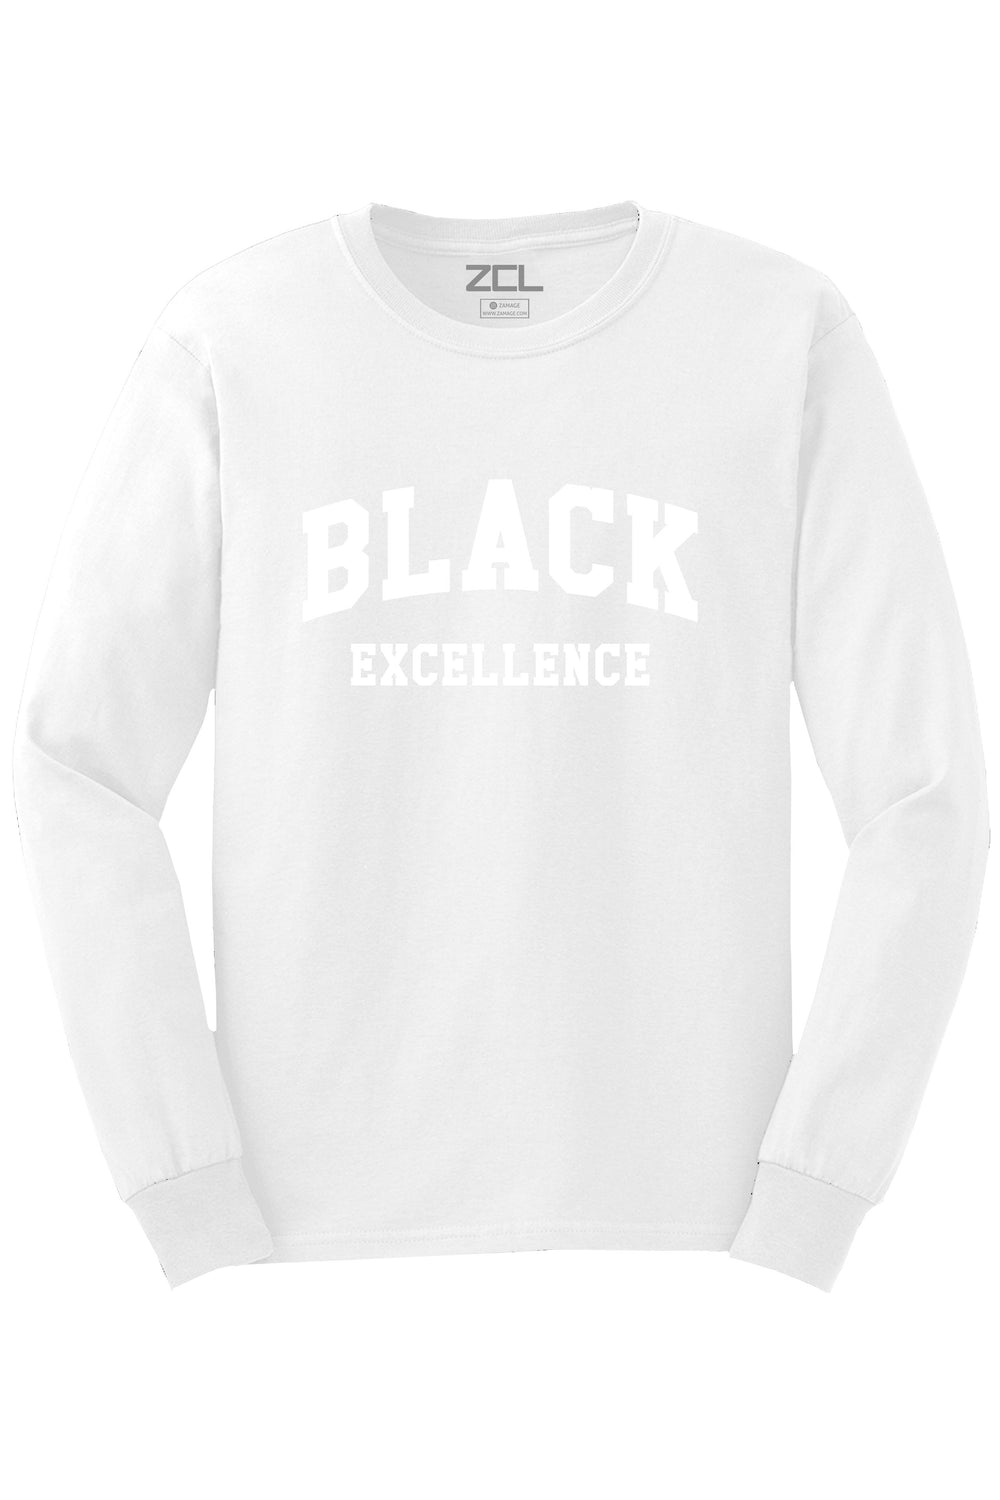 Black Excellence Long Sleeve Tee (White Logo) - Zamage